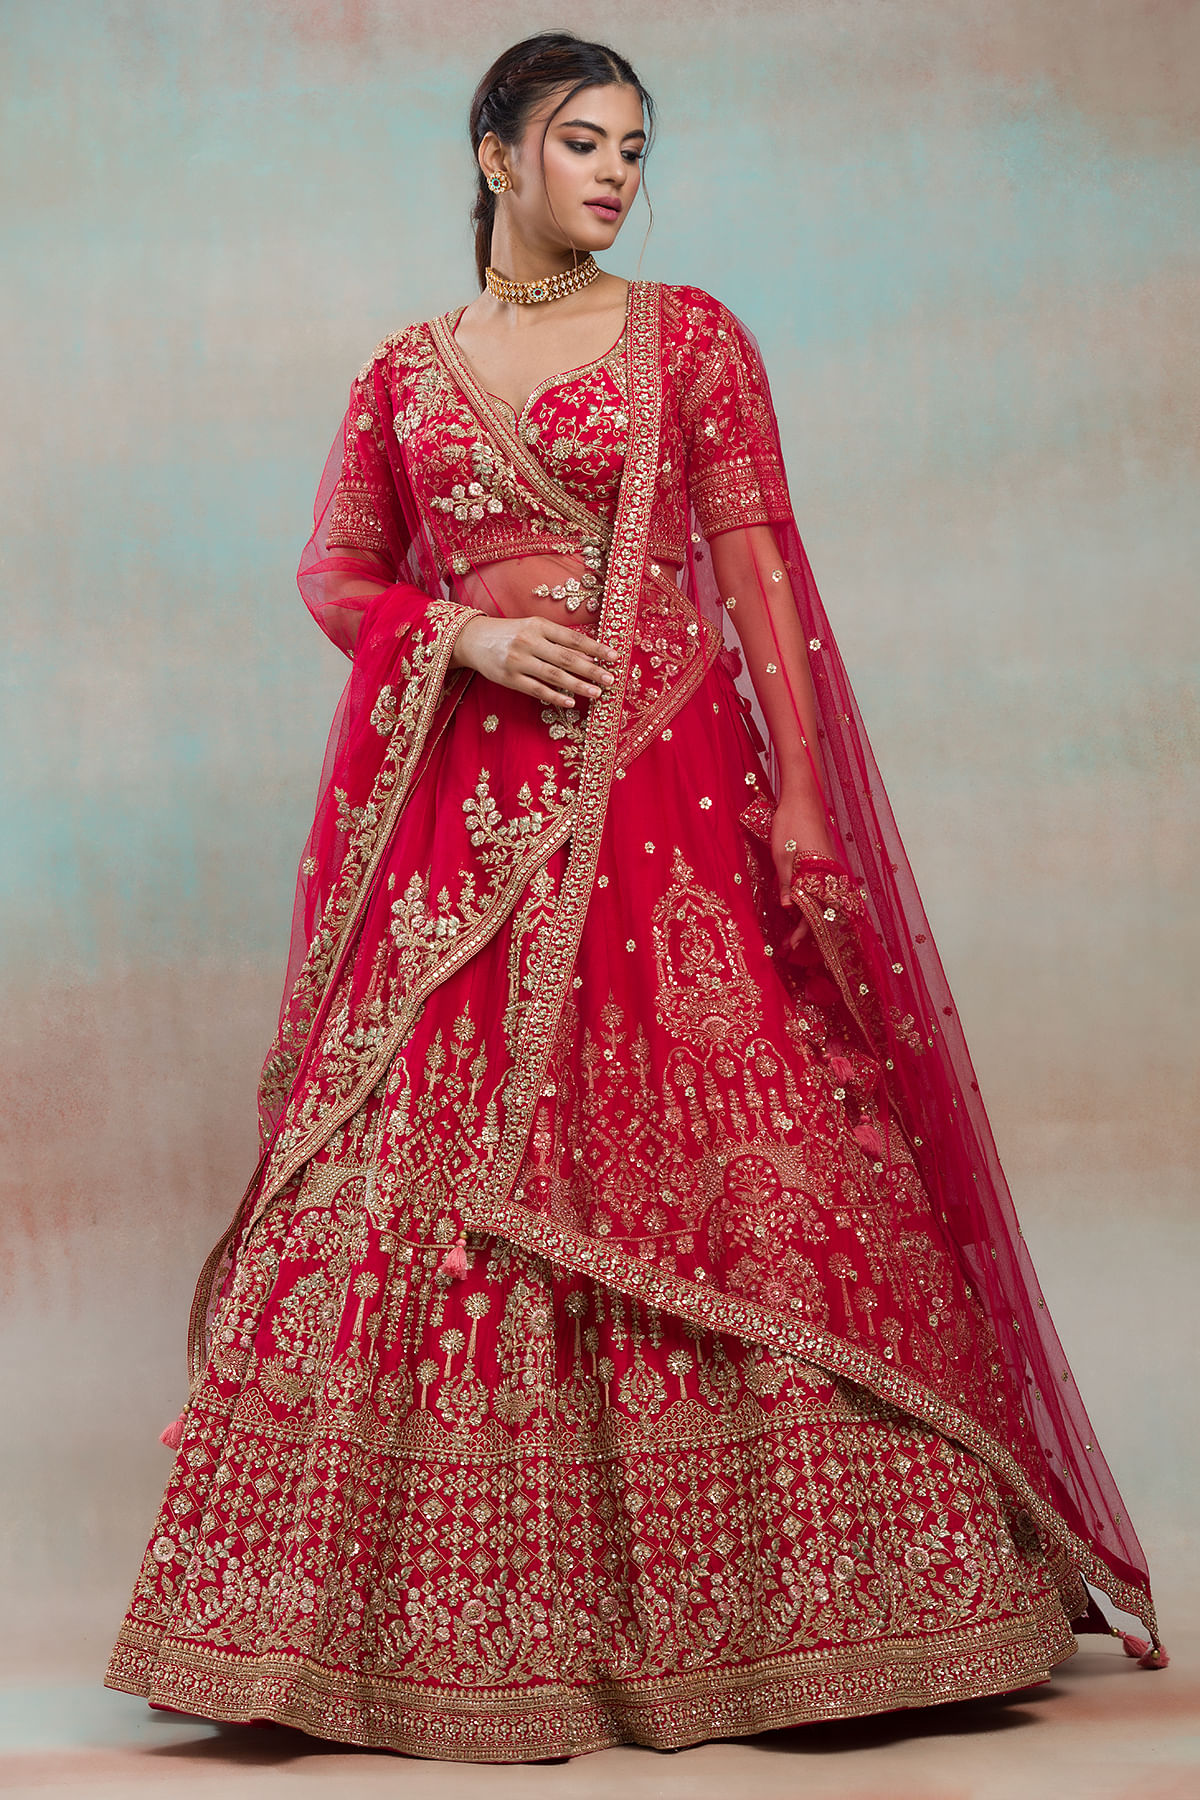 Bridal Draping by Dolly Jain | Embellished dupatta draping - YouTube